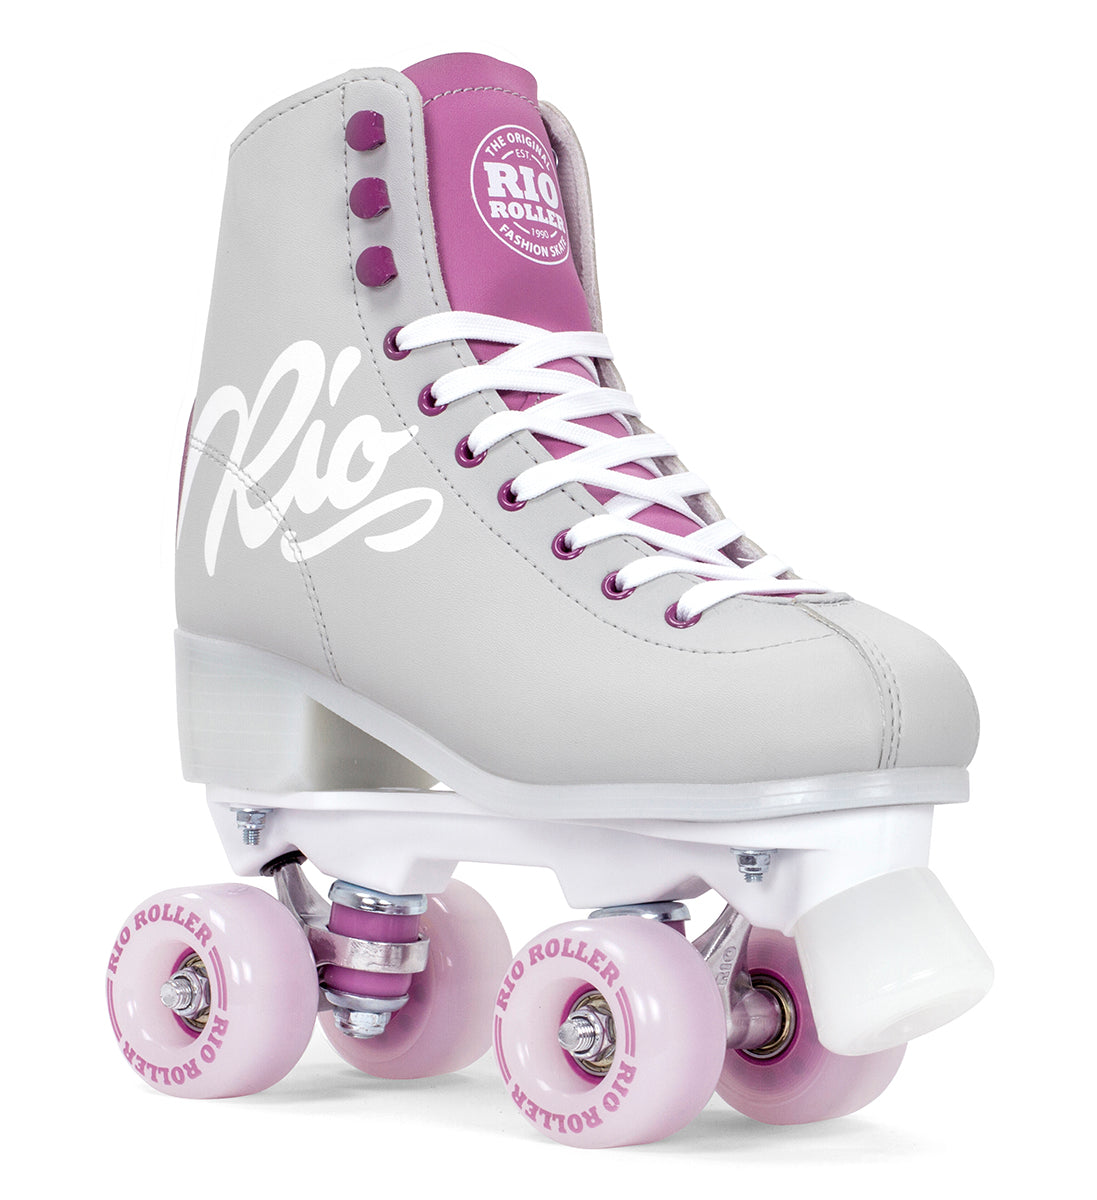 Rio Roller Script Quad Roller Skates - Grey/Purple - Momma Trucker Skates